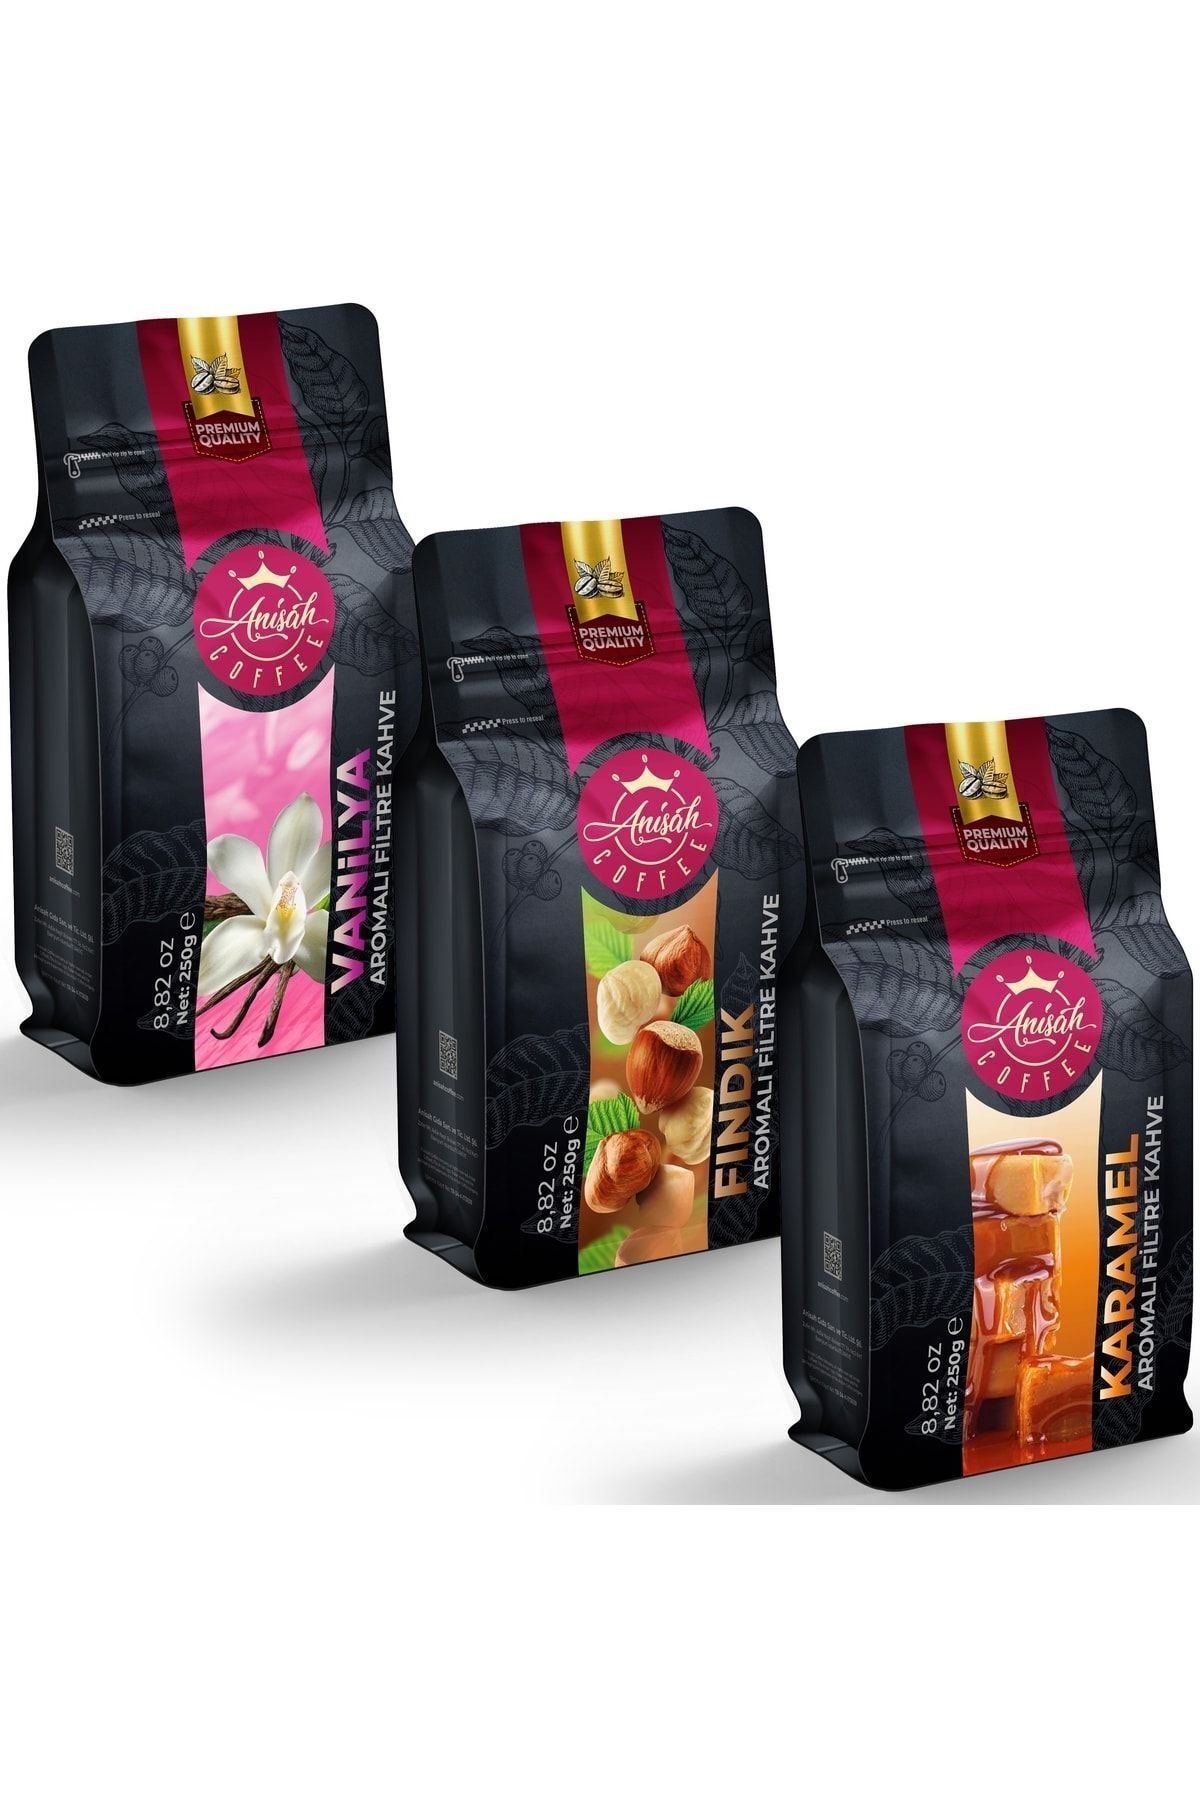 Anisah Coffee Aromalı Filtre Kahve Set 3 X 250 Gram Fındık Vaniya Karamel